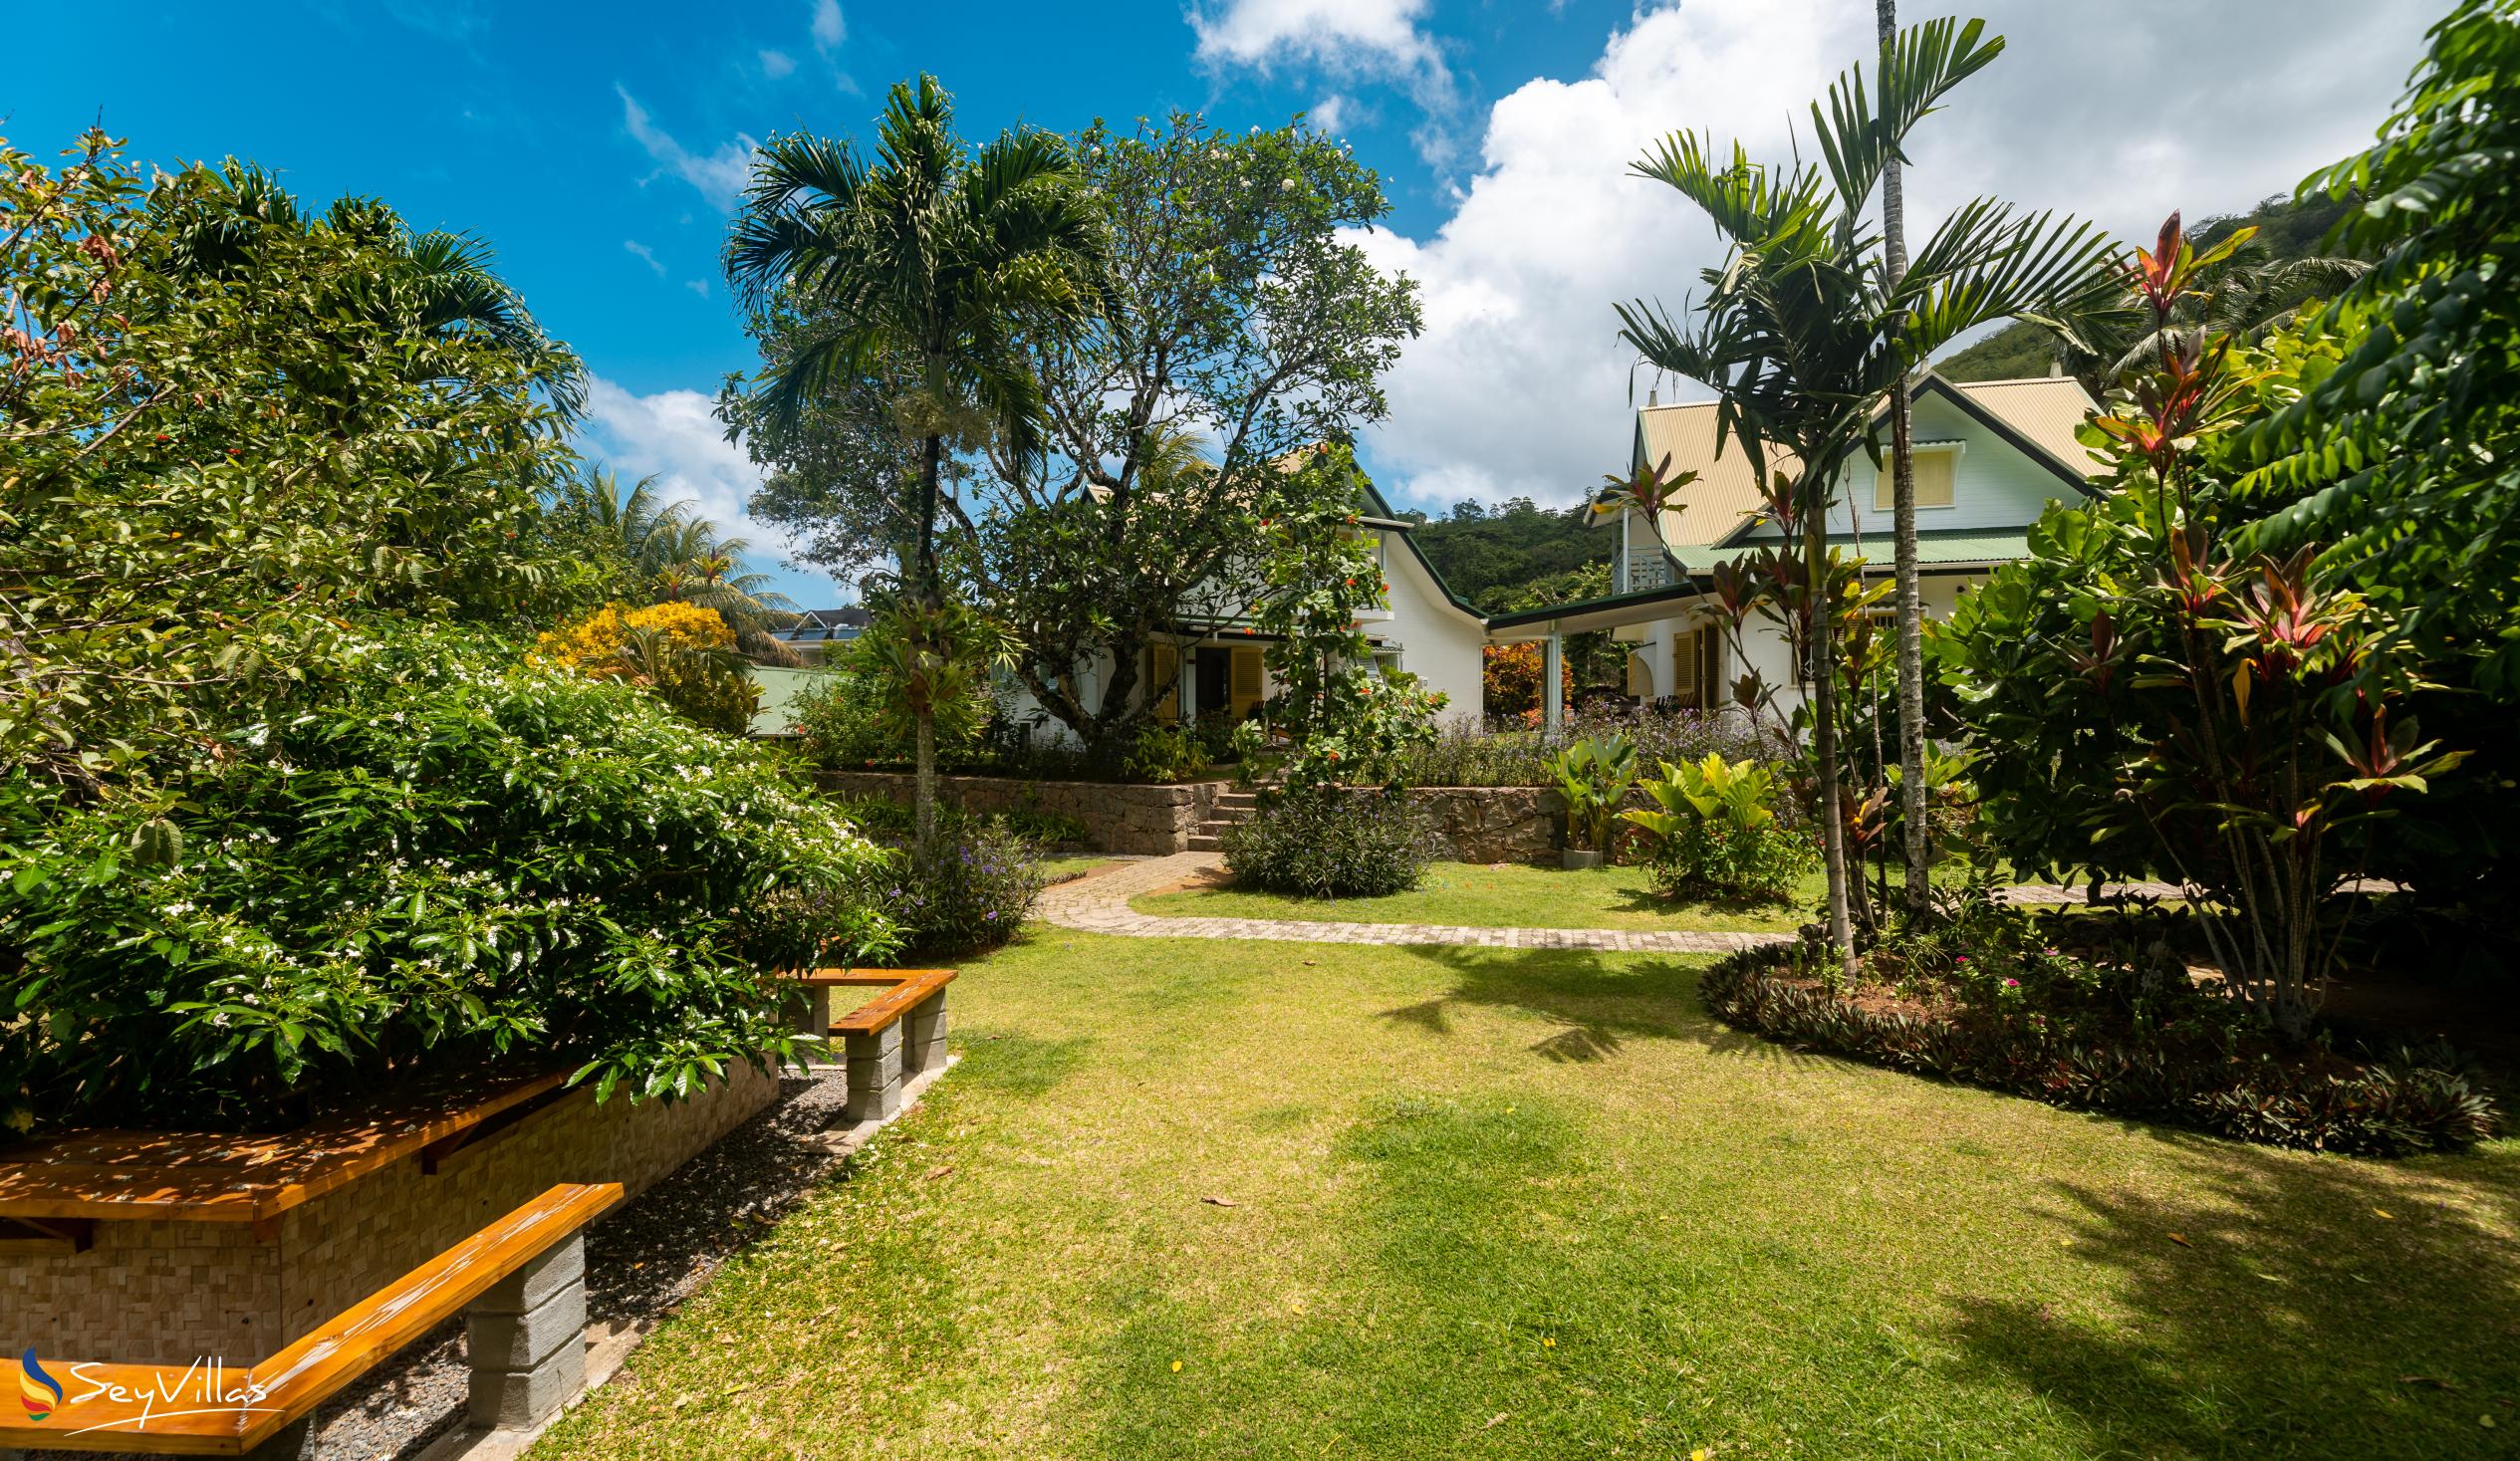 Foto 9: Villa Kordia - Aussenbereich - Mahé (Seychellen)